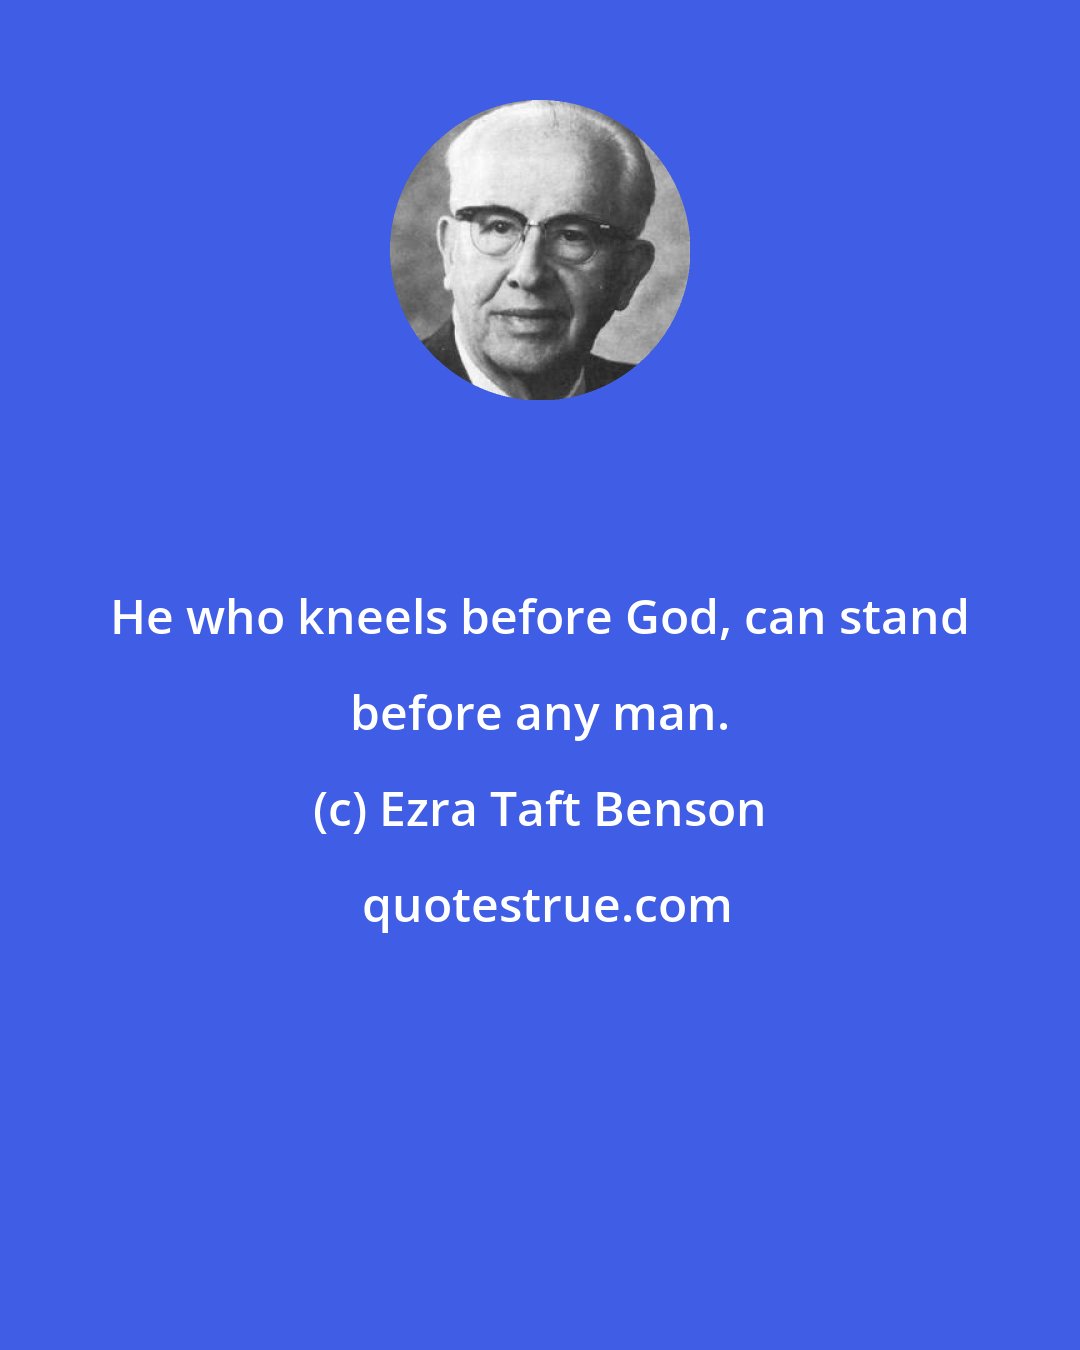 Ezra Taft Benson: He who kneels before God, can stand before any man.